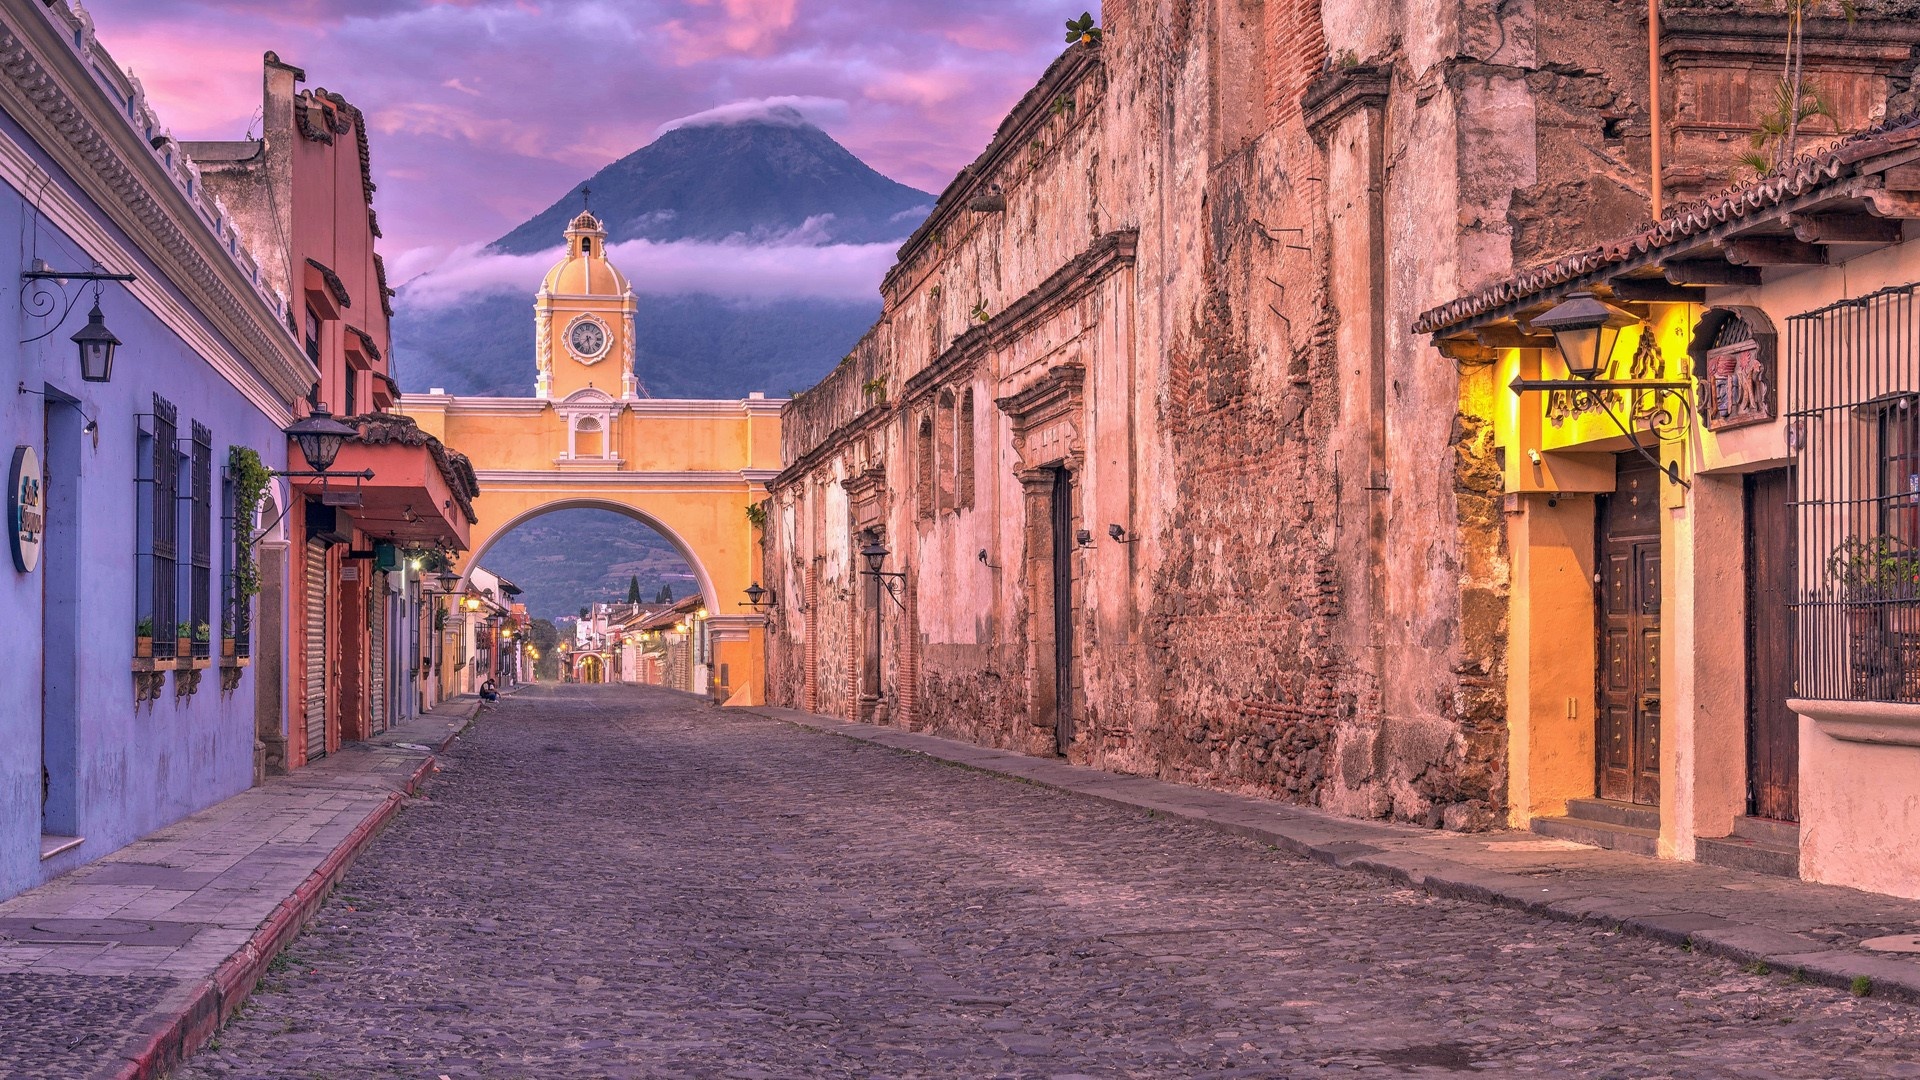 Guatemala City, Antigua wallpaper, Arch street view, Vibrant colors, 1920x1080 Full HD Desktop